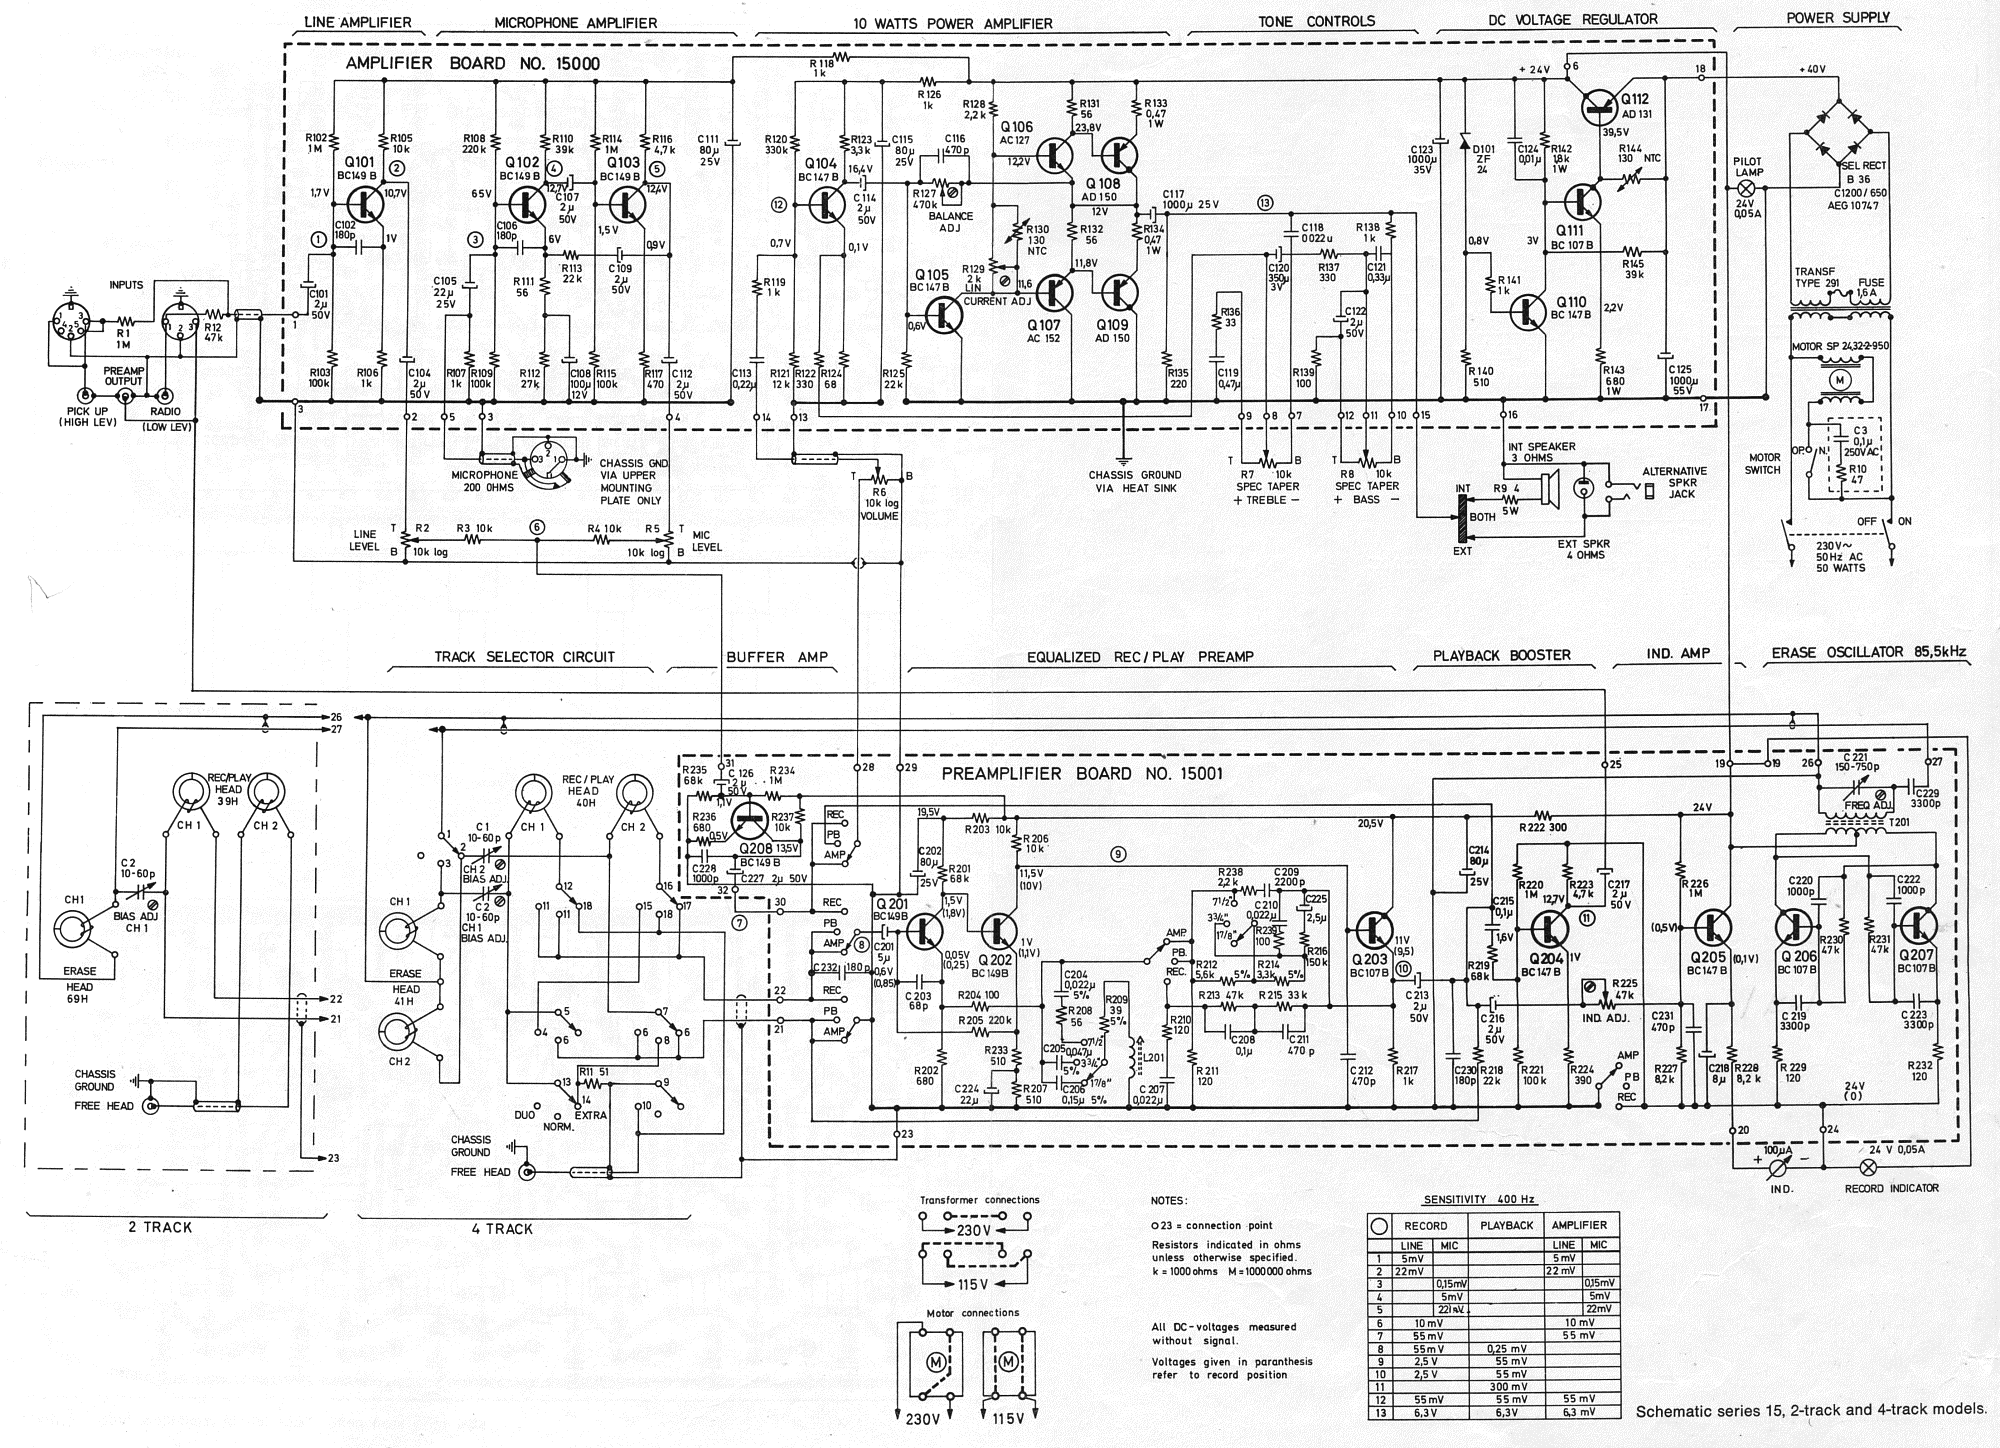 Tandberg Series 15 Schematic diagram of Tandberg Tape Recorder Series 15